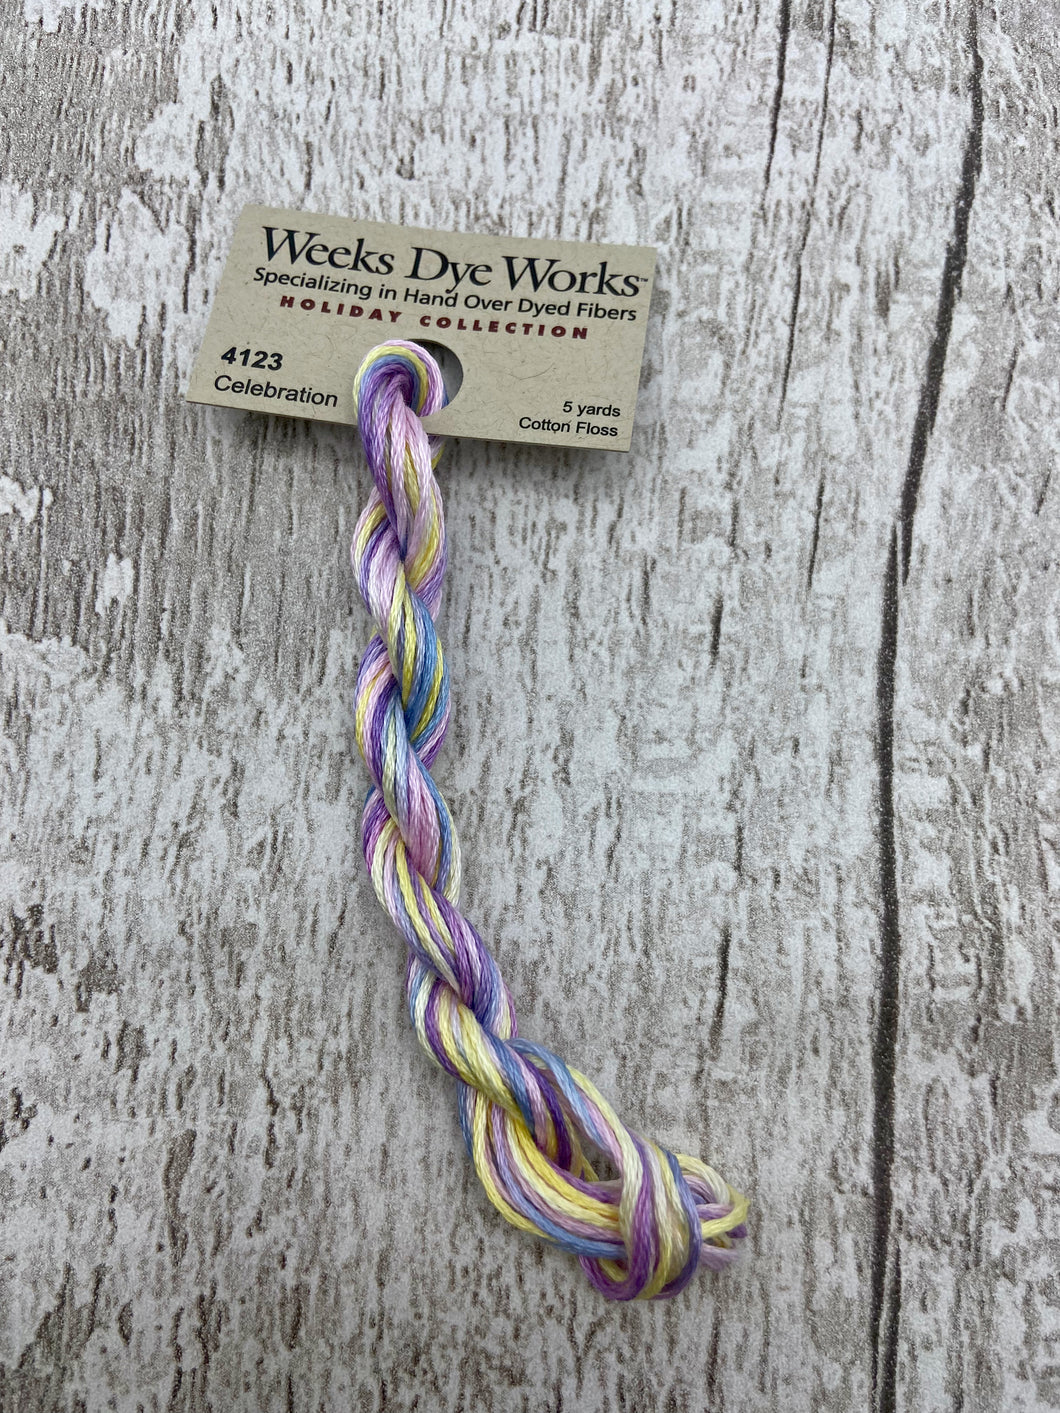 Celebration (#4123) Weeks Dye Works 6-strand cotton floss